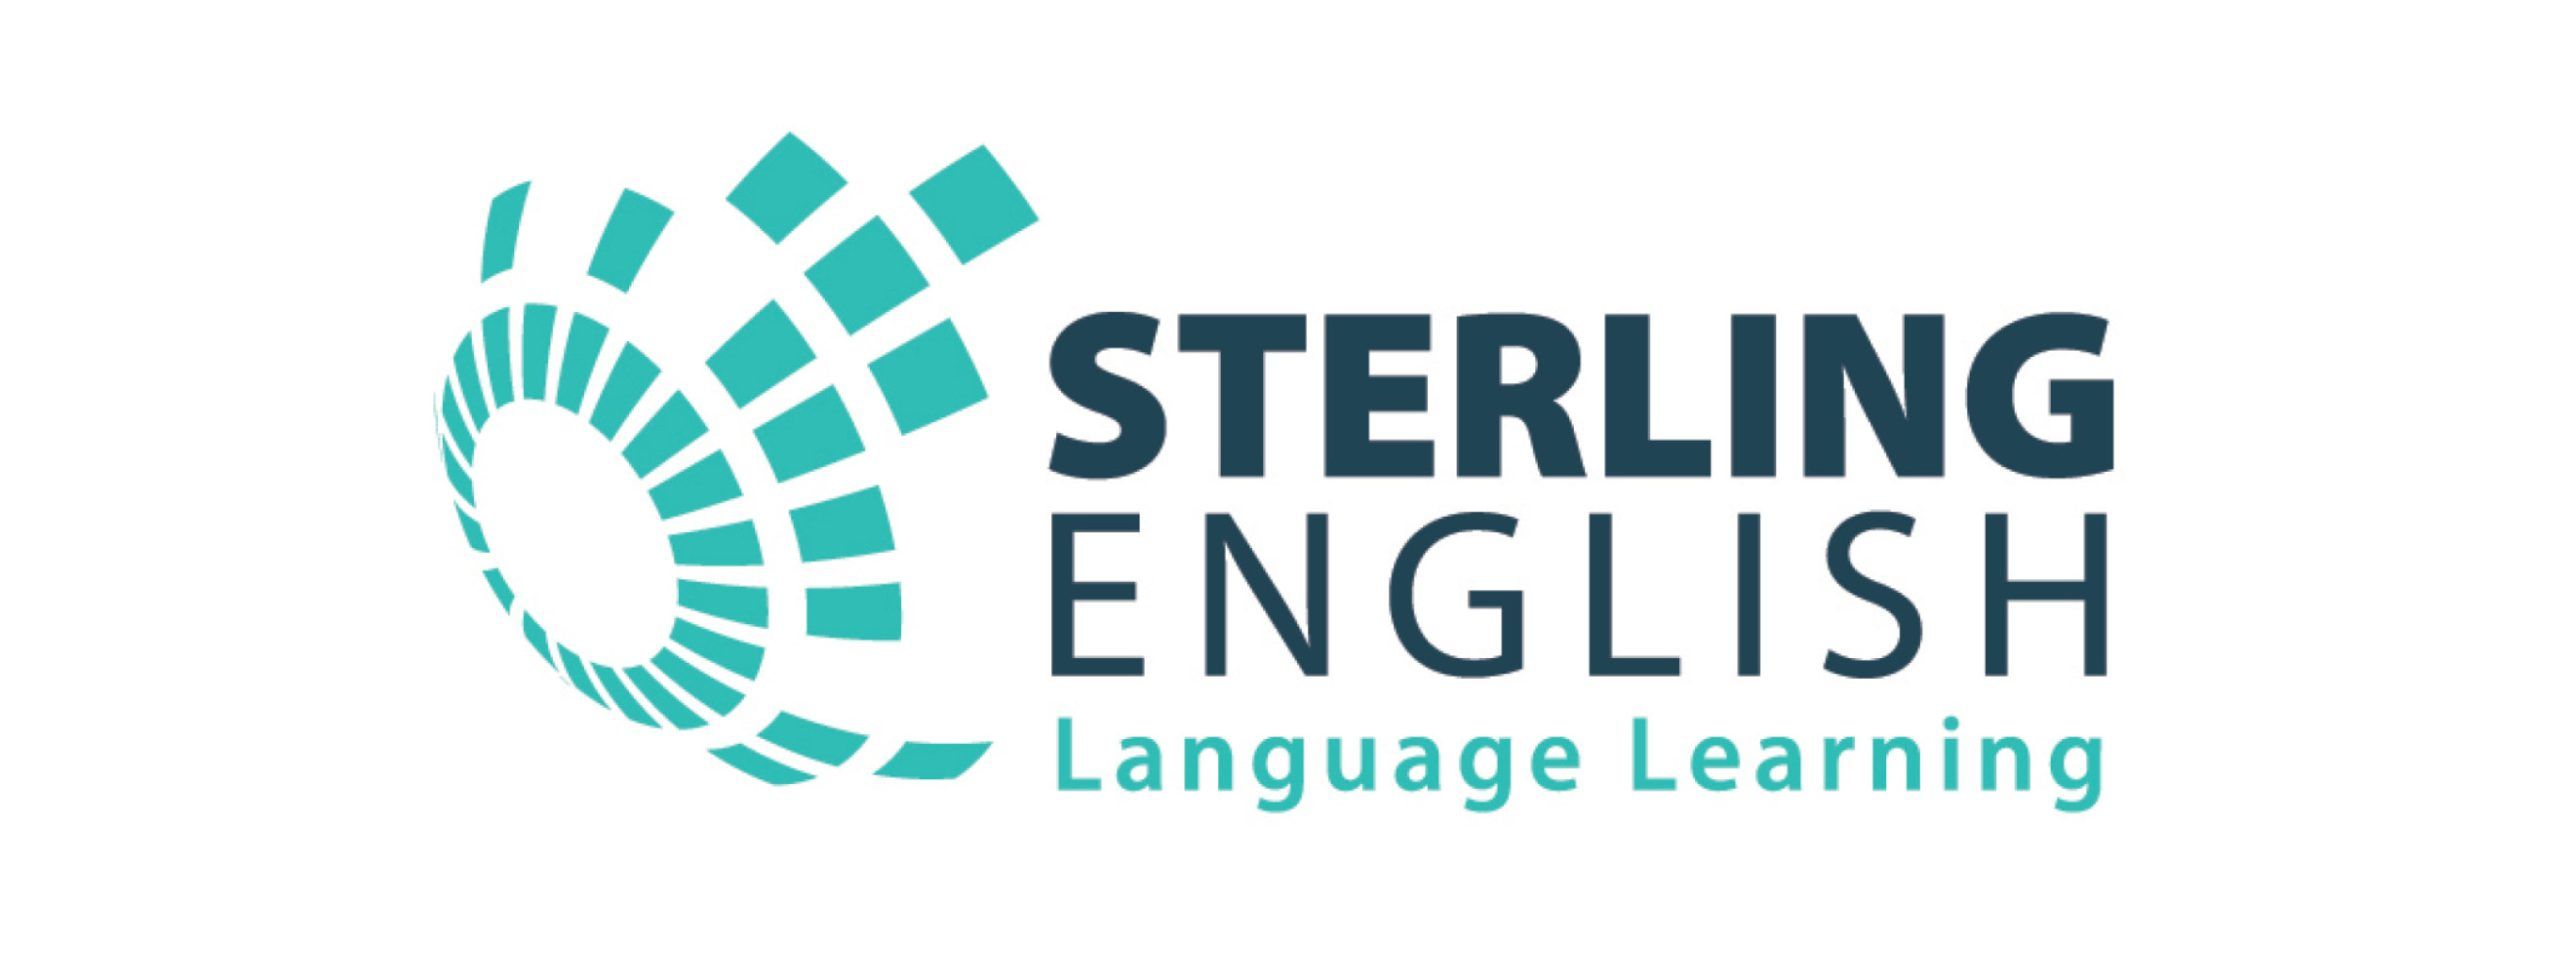 Sterling English Language Learning